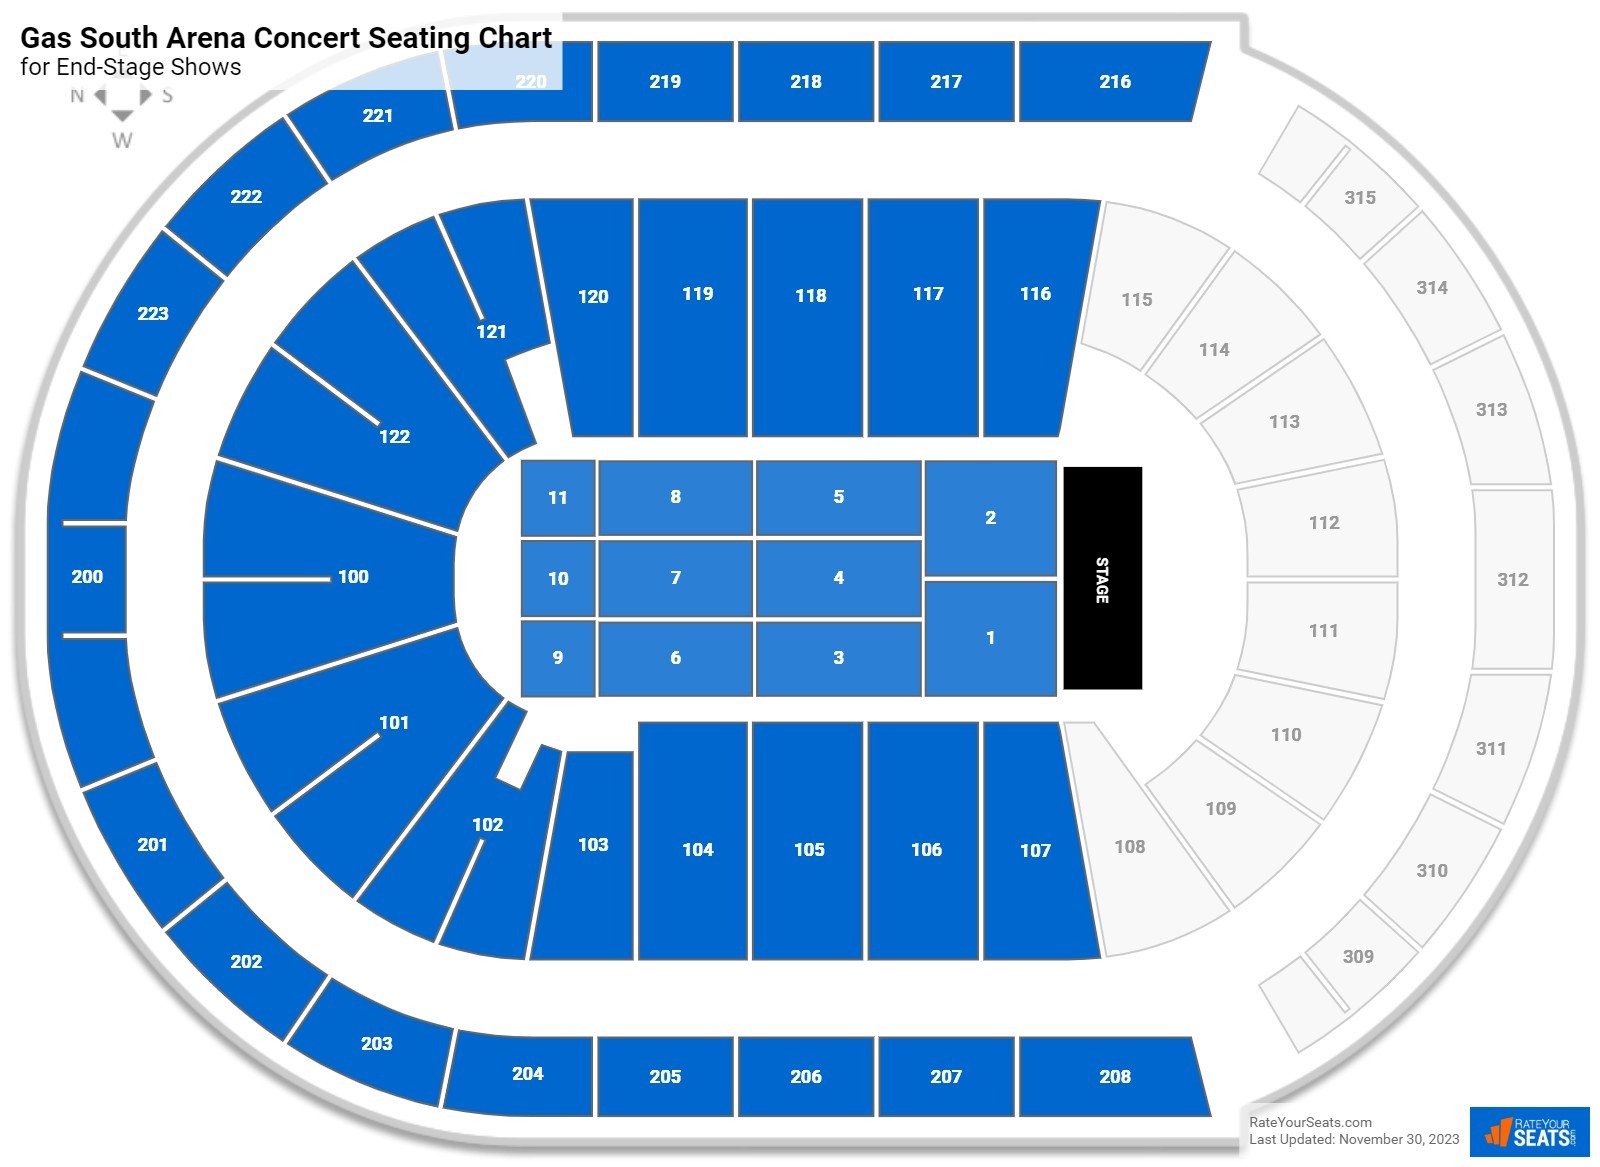 Infinite Energy Arena Concert Seating Chart